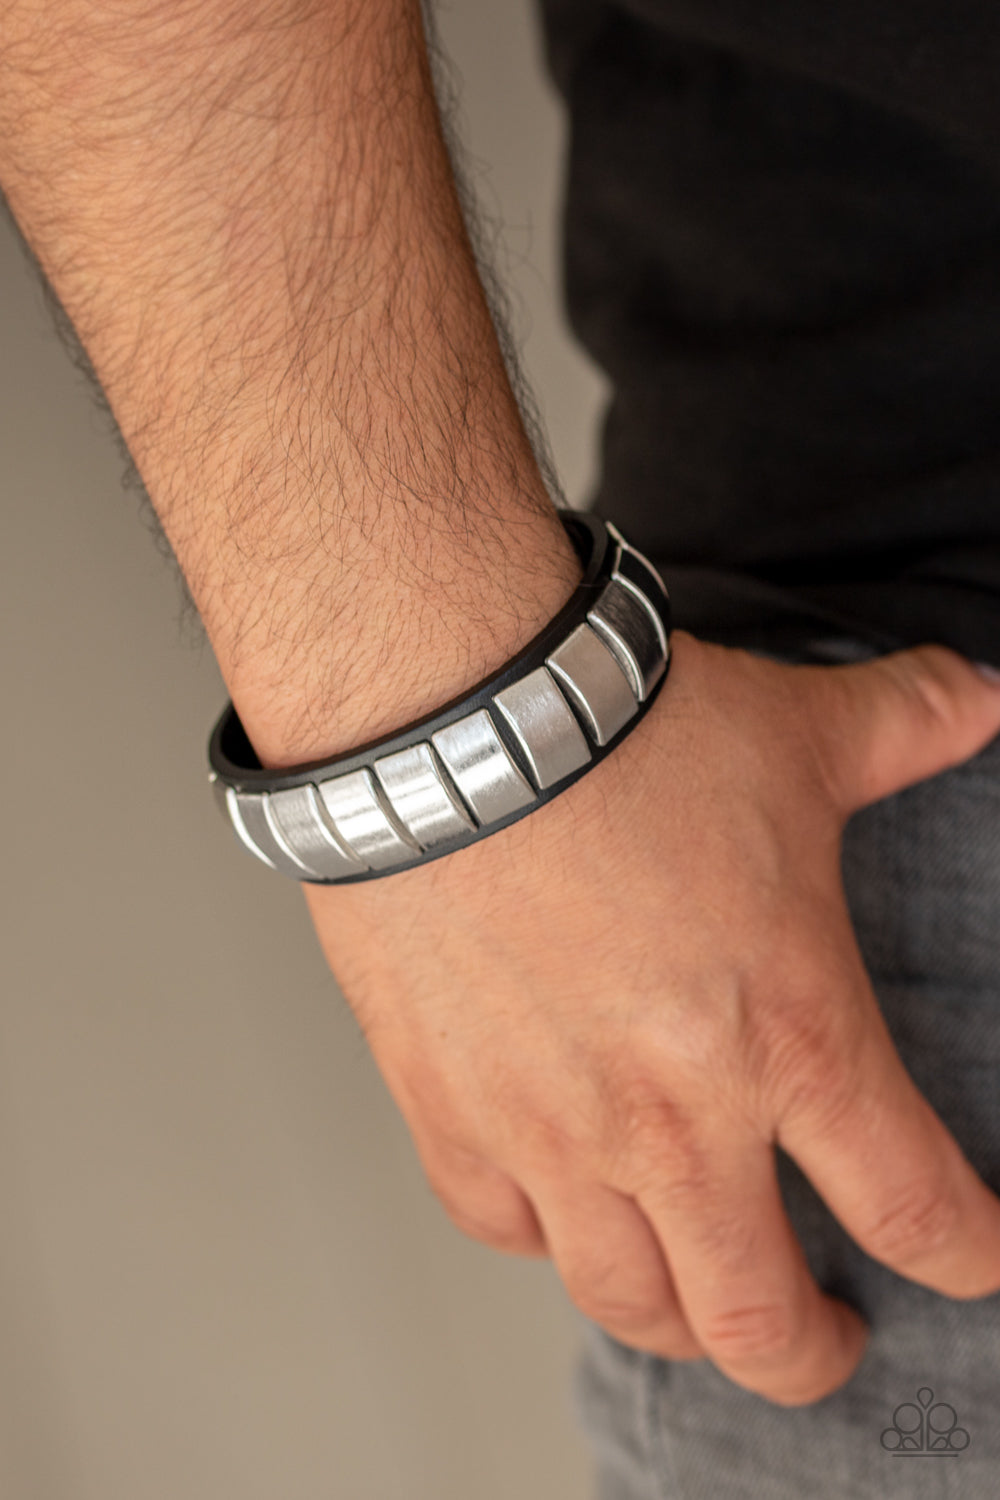 Moto Mode Black Urban Bracelet - Paparazzi Accessories